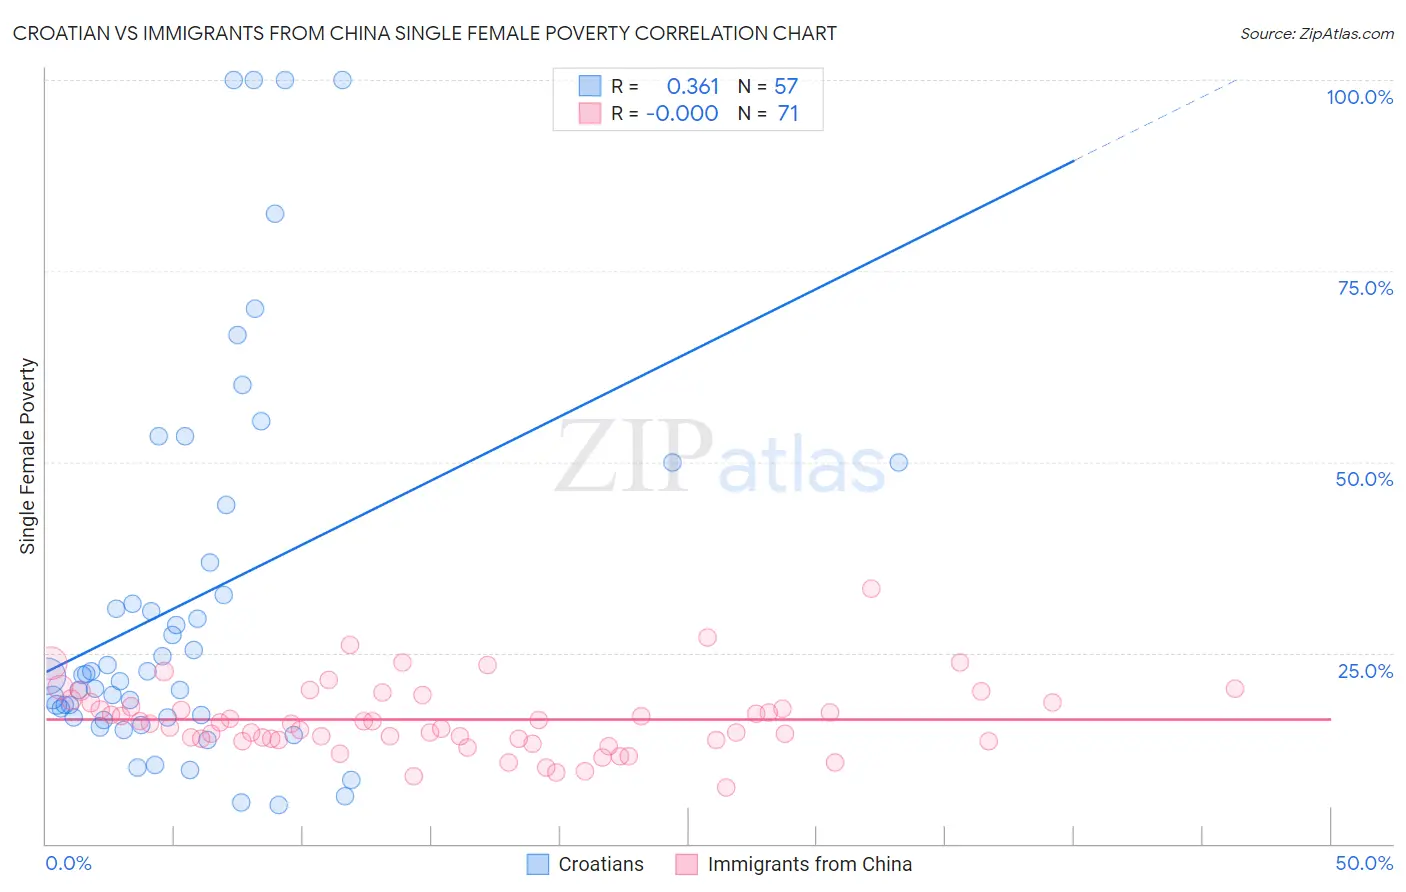 Croatian vs Immigrants from China Single Female Poverty